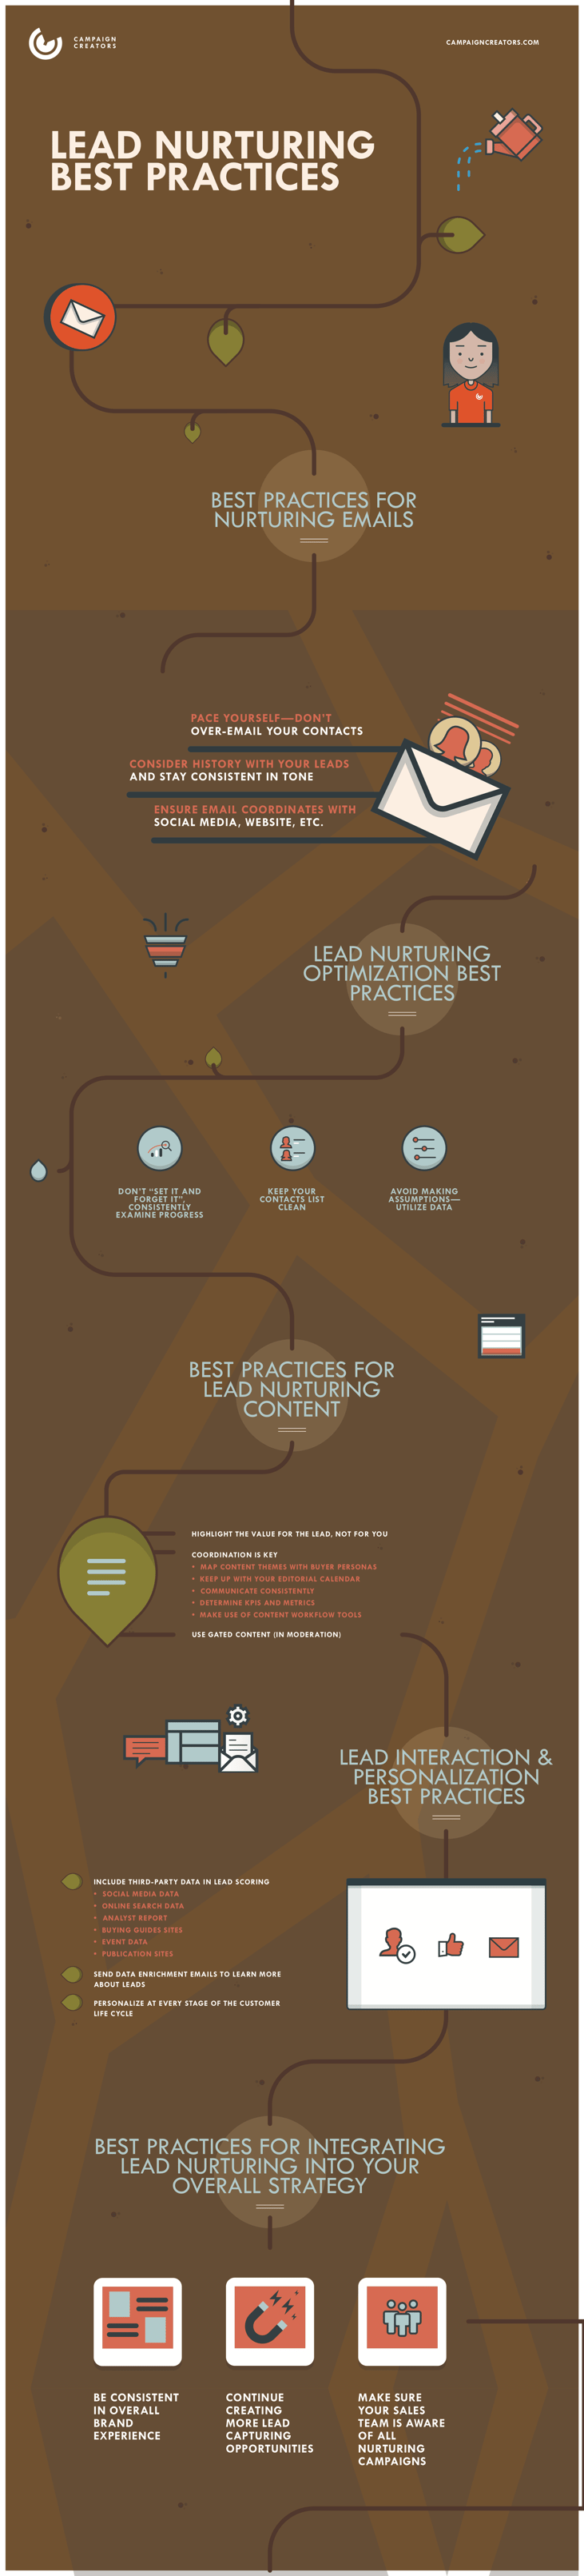 CC - Lead Nurturing Best Practices - Lesson 10 Infographic